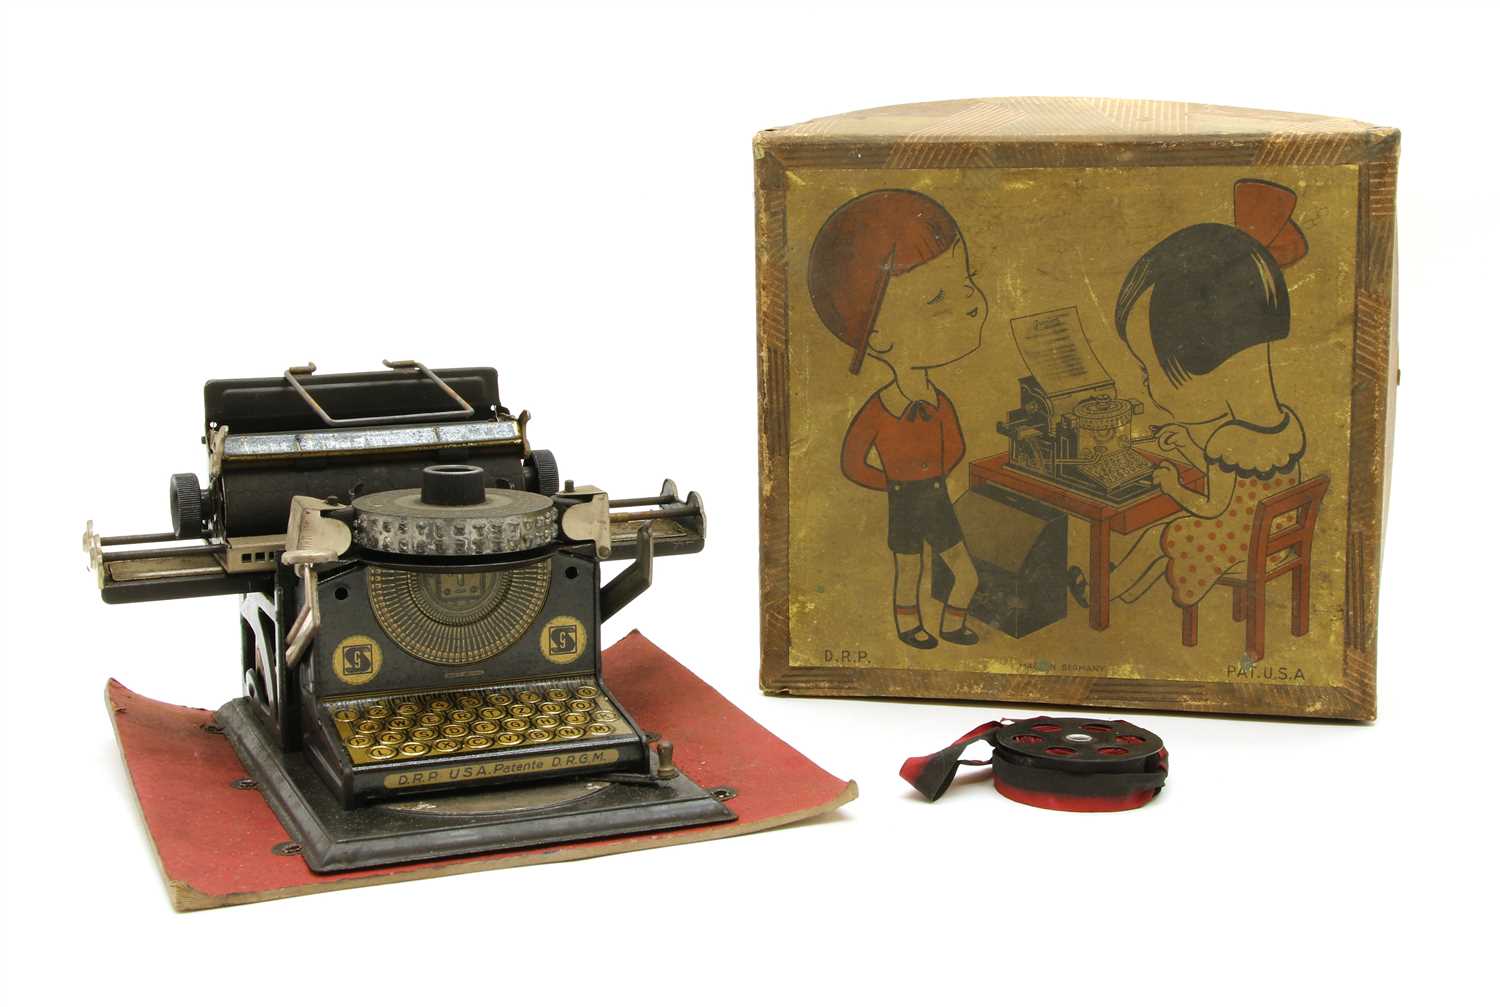 Lot 240 - A German D R P childs typewriter